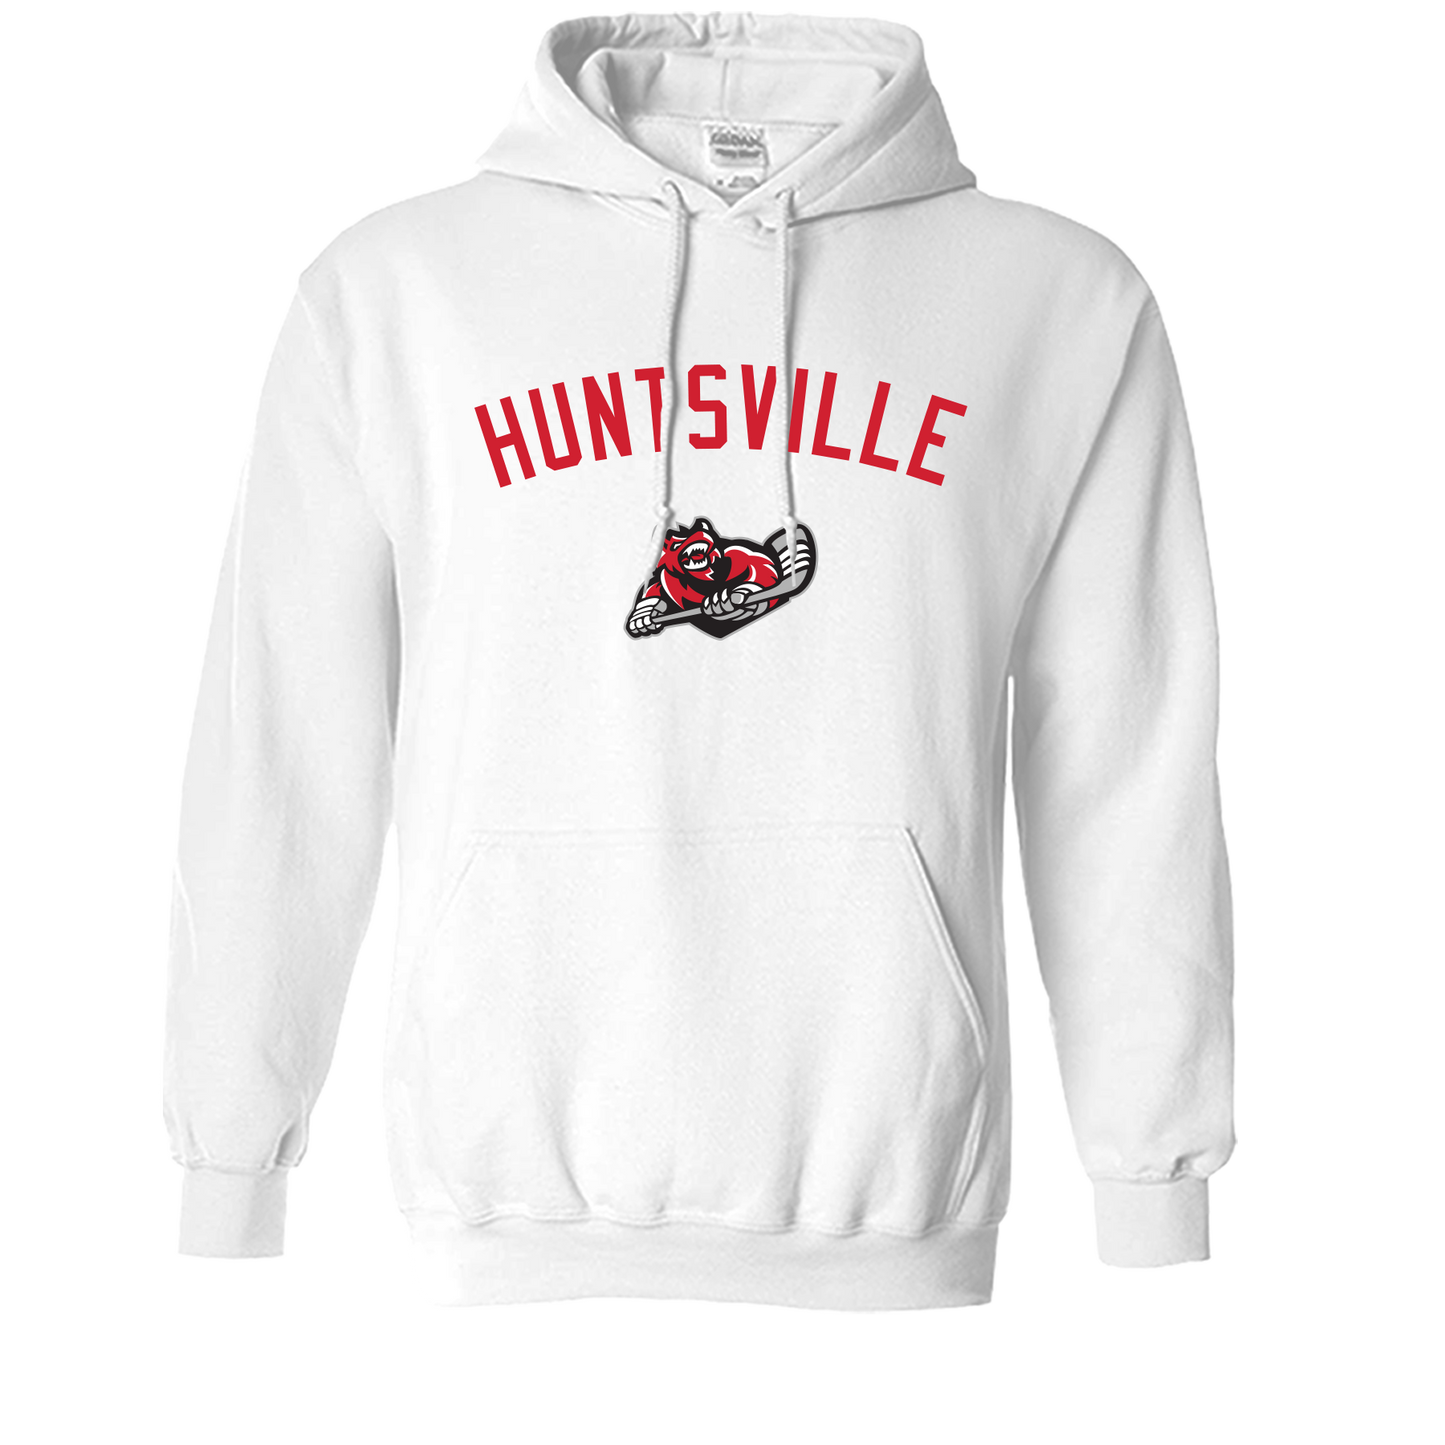 Huntsville City Hoodie